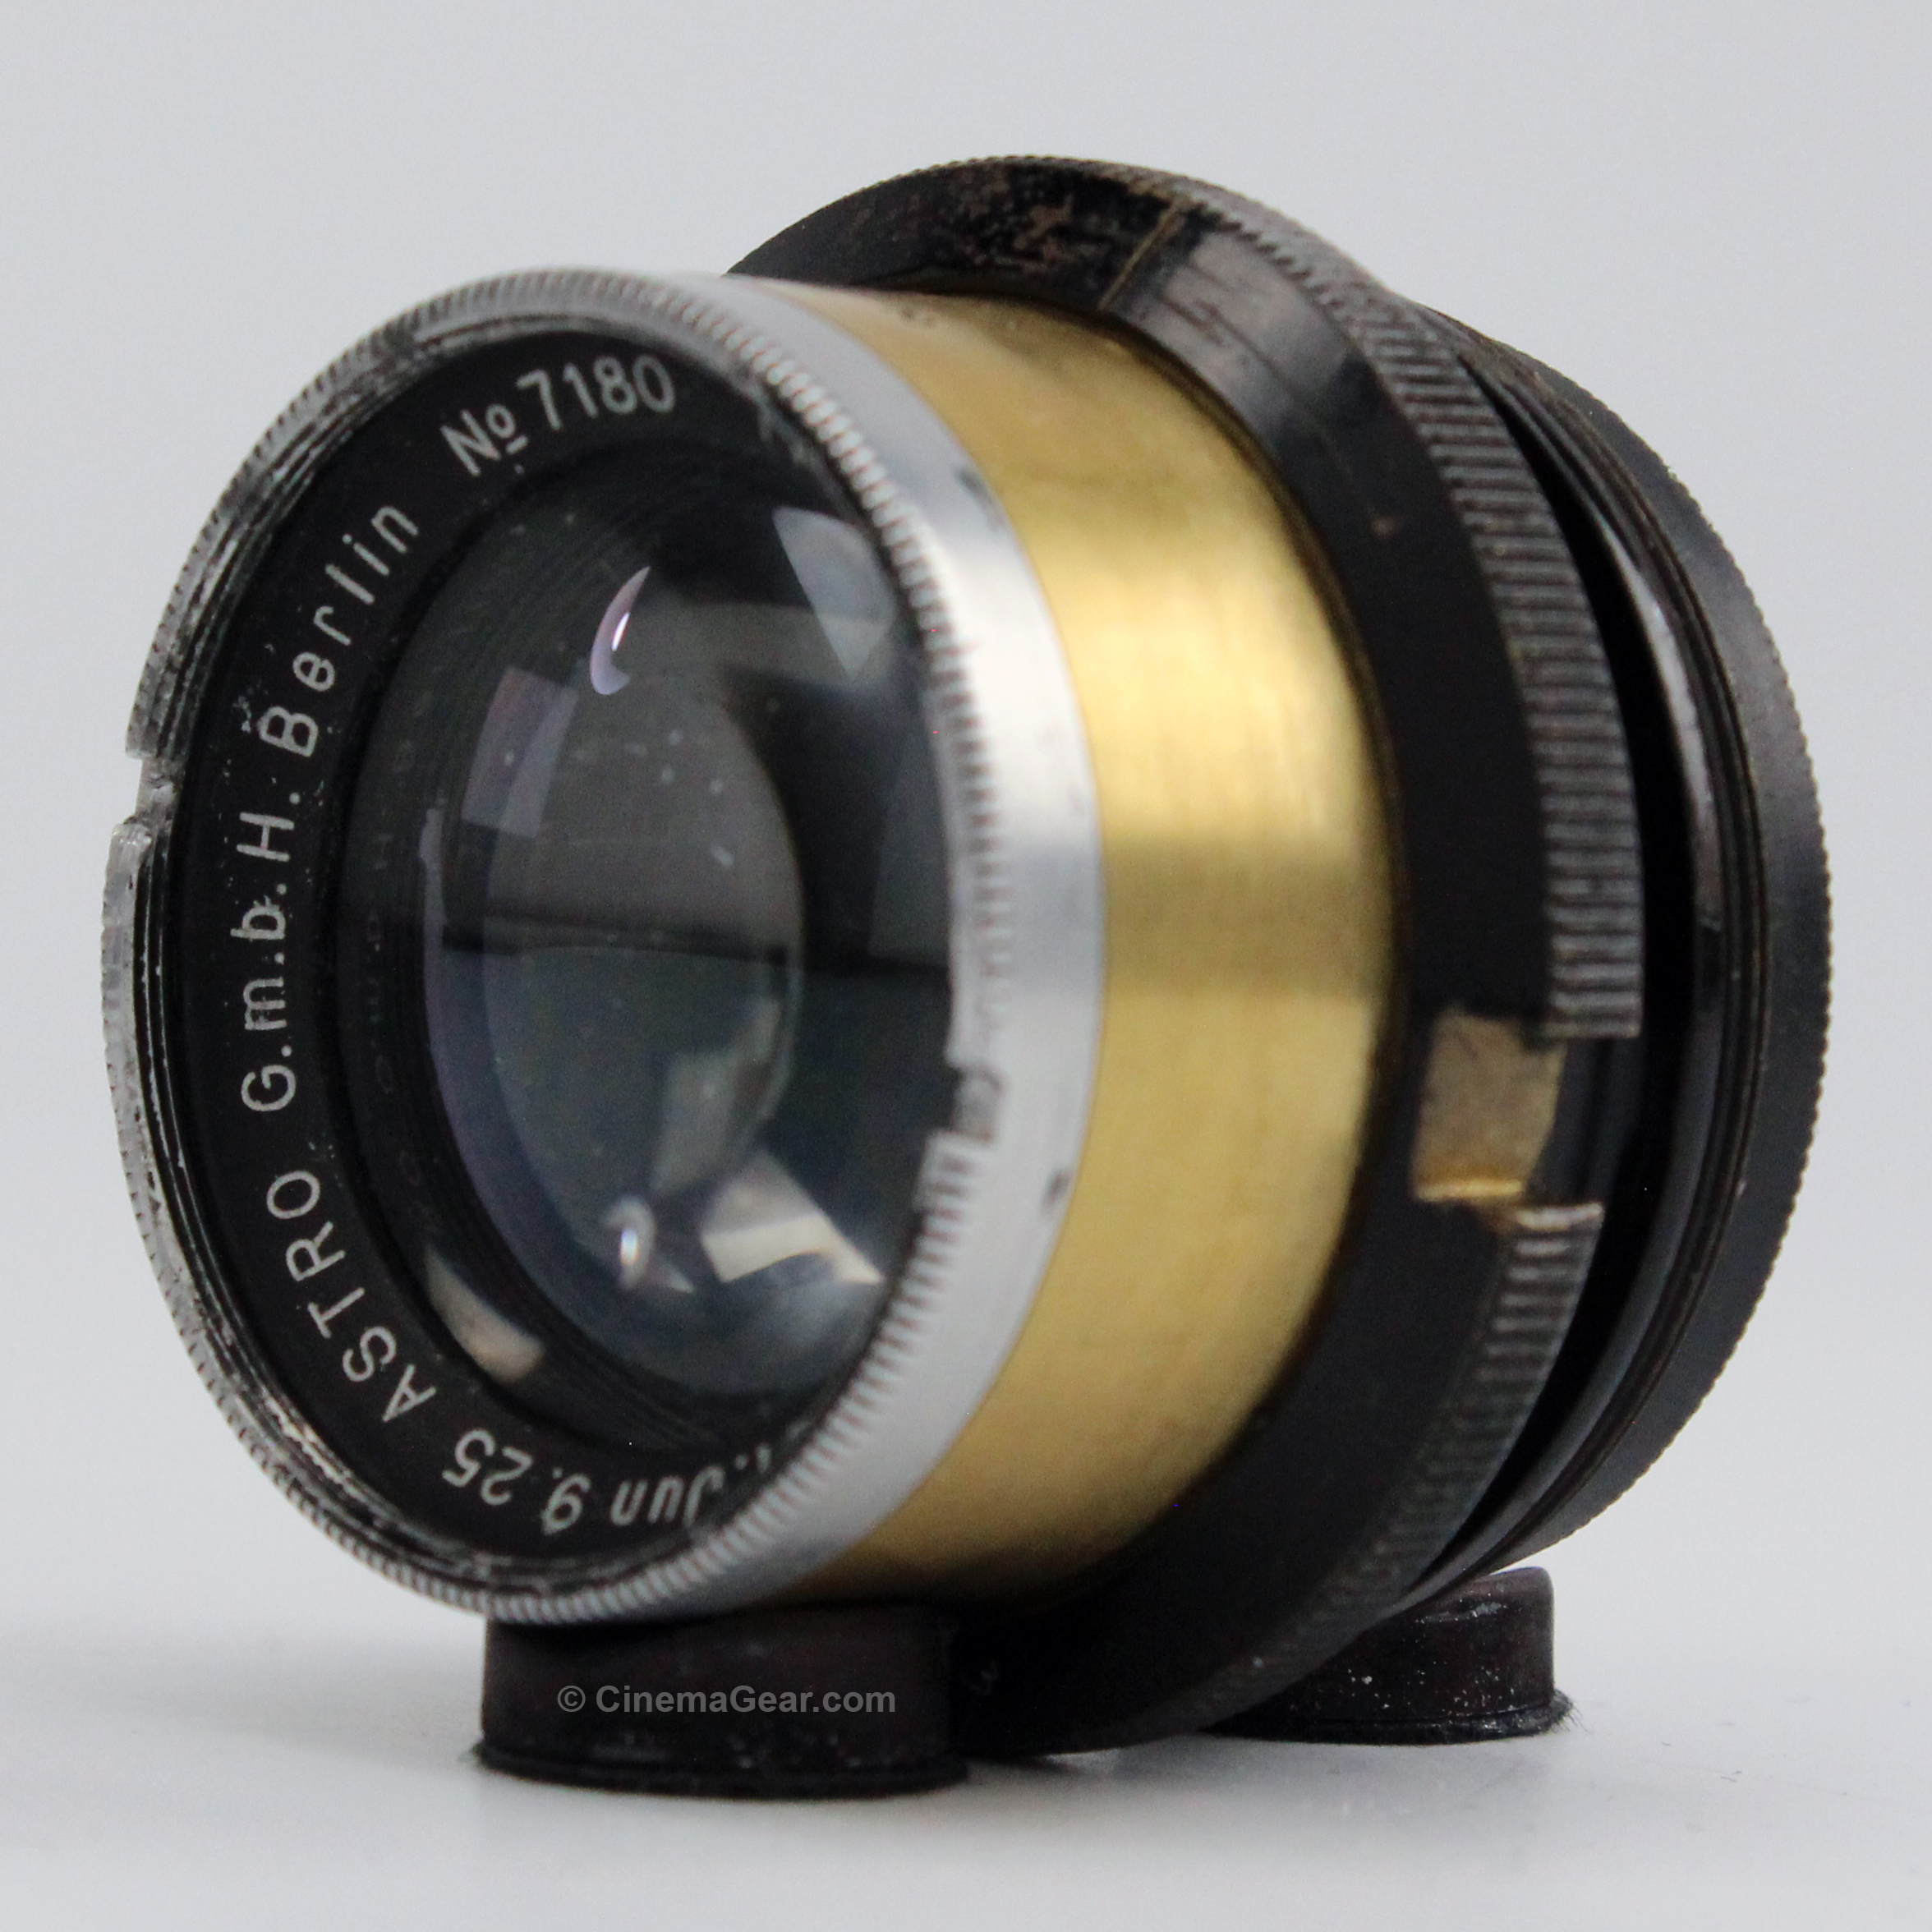 Astro Berlin Pan-Tachar 50mm f2 lens cell (no mount).